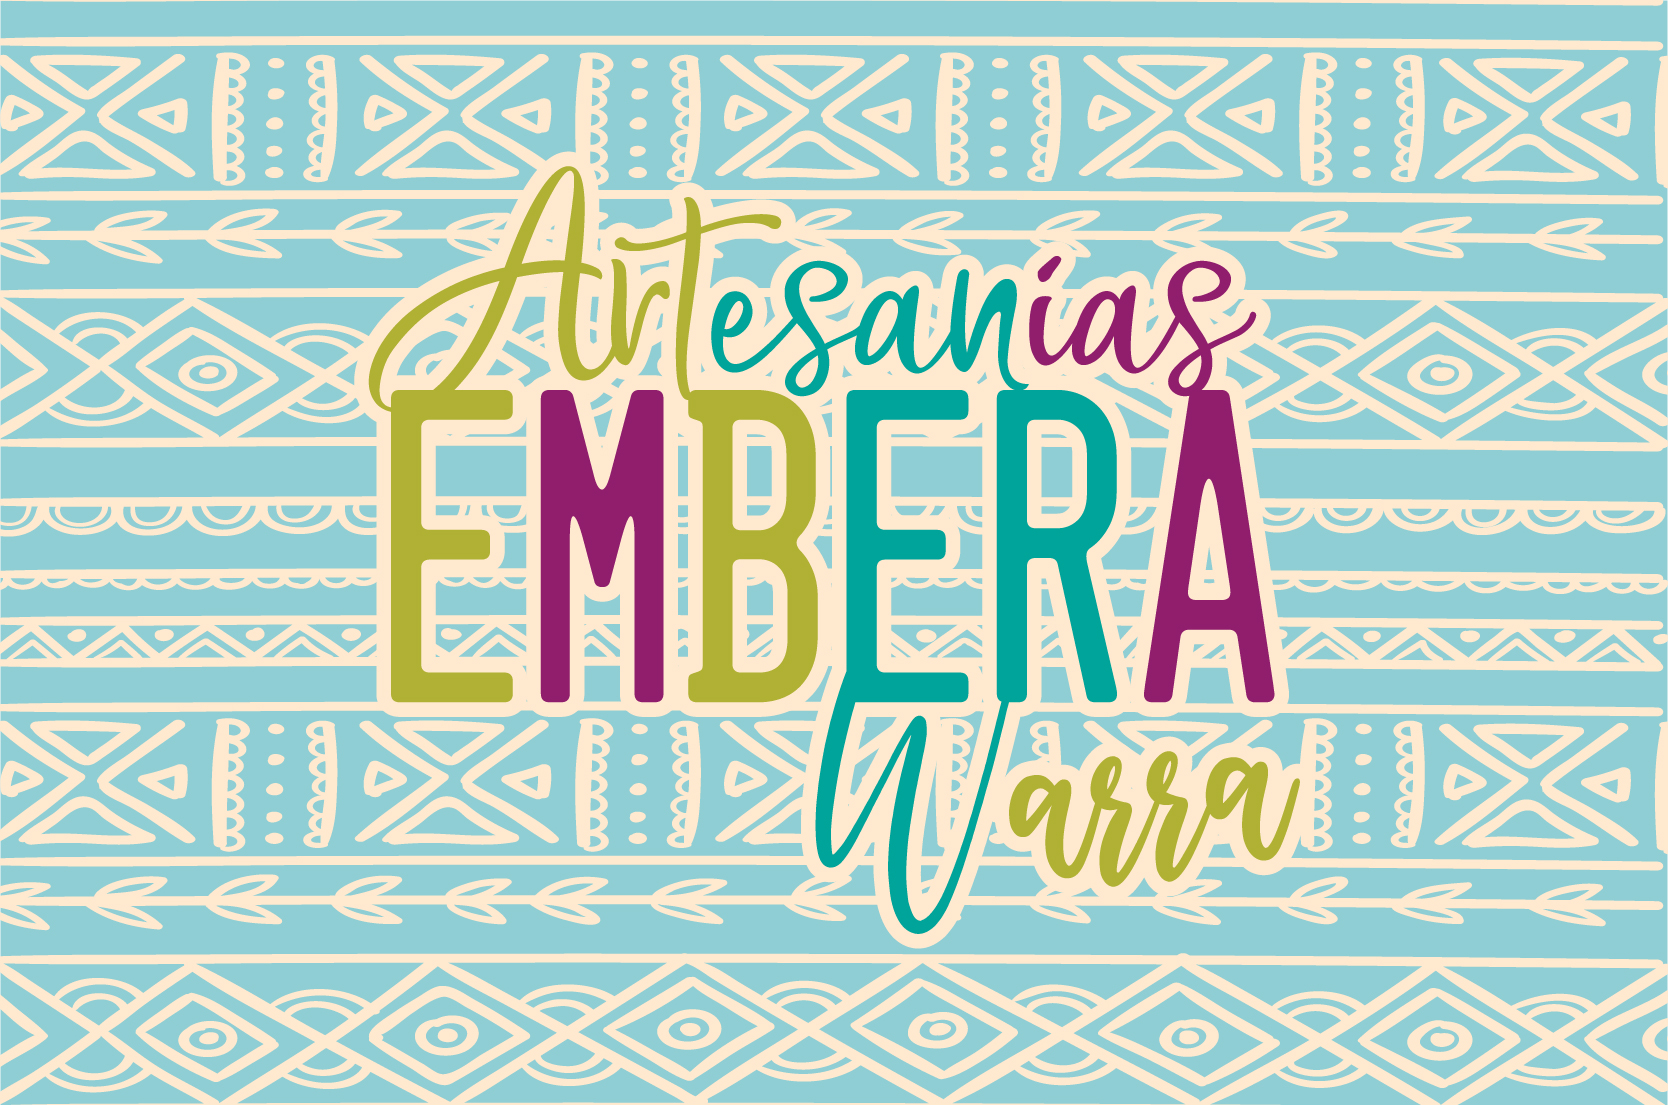 Artesanias Embera - Warra